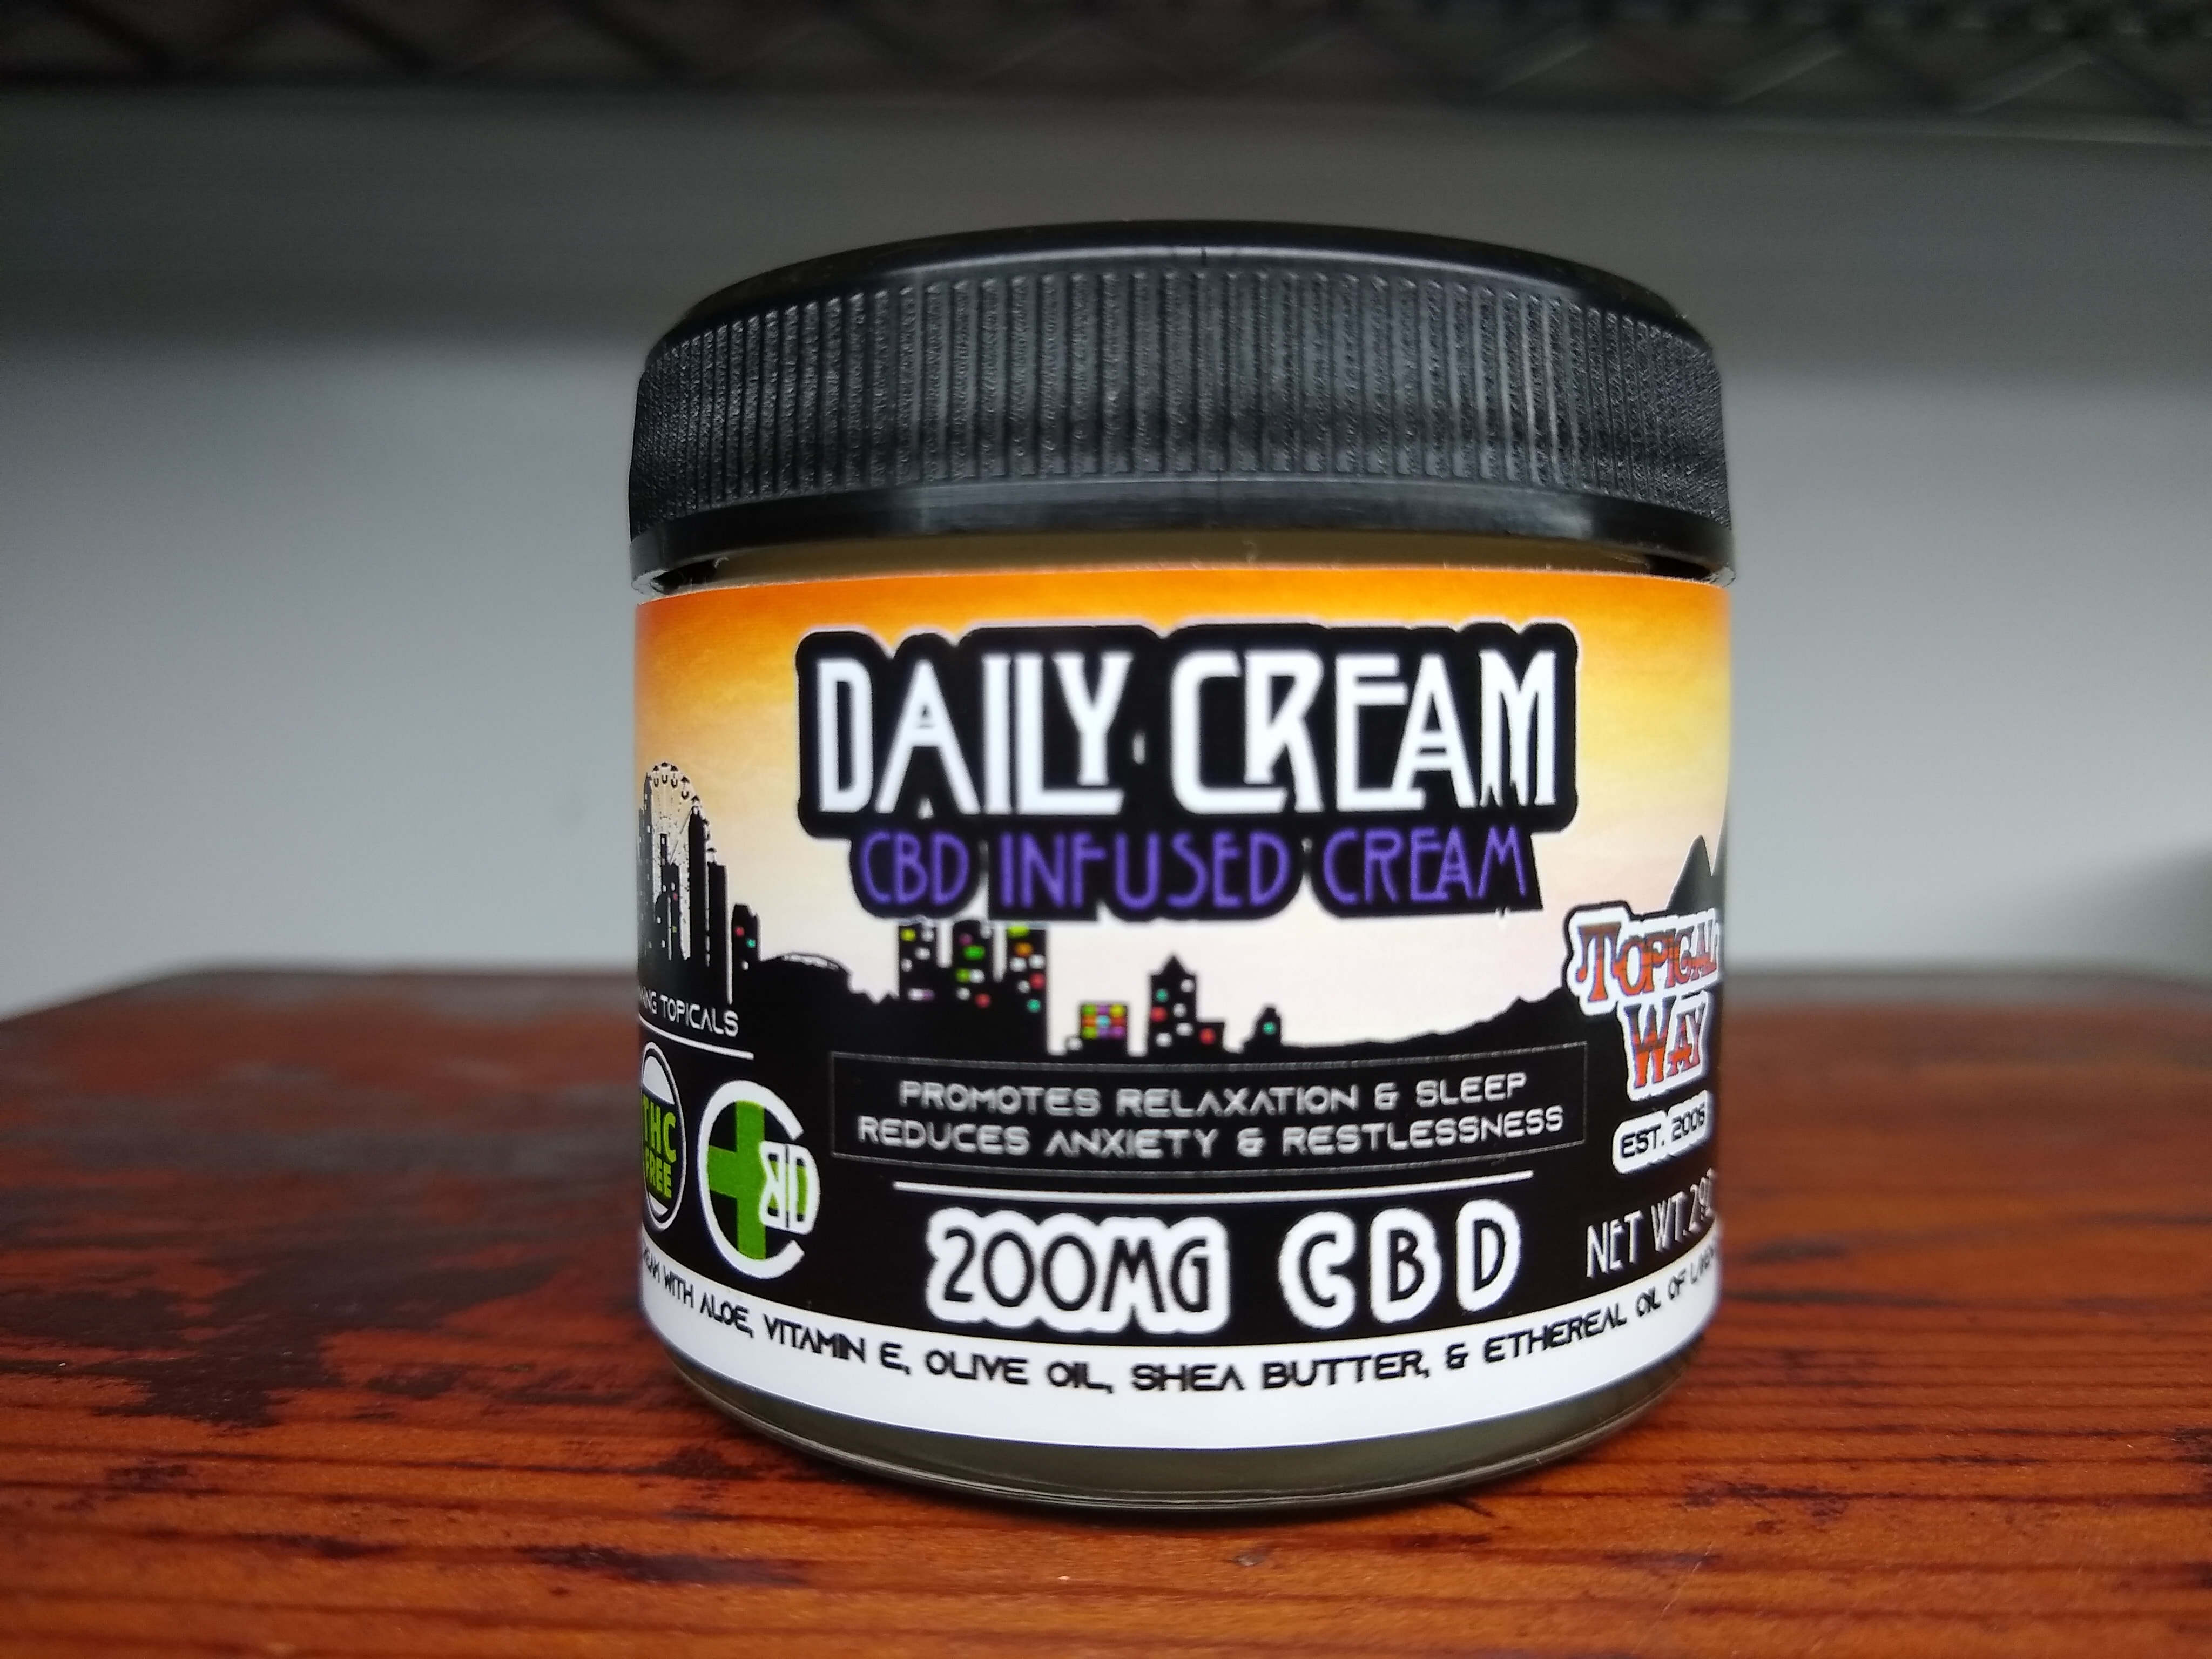 Daily Cream from Highway2 CBD.